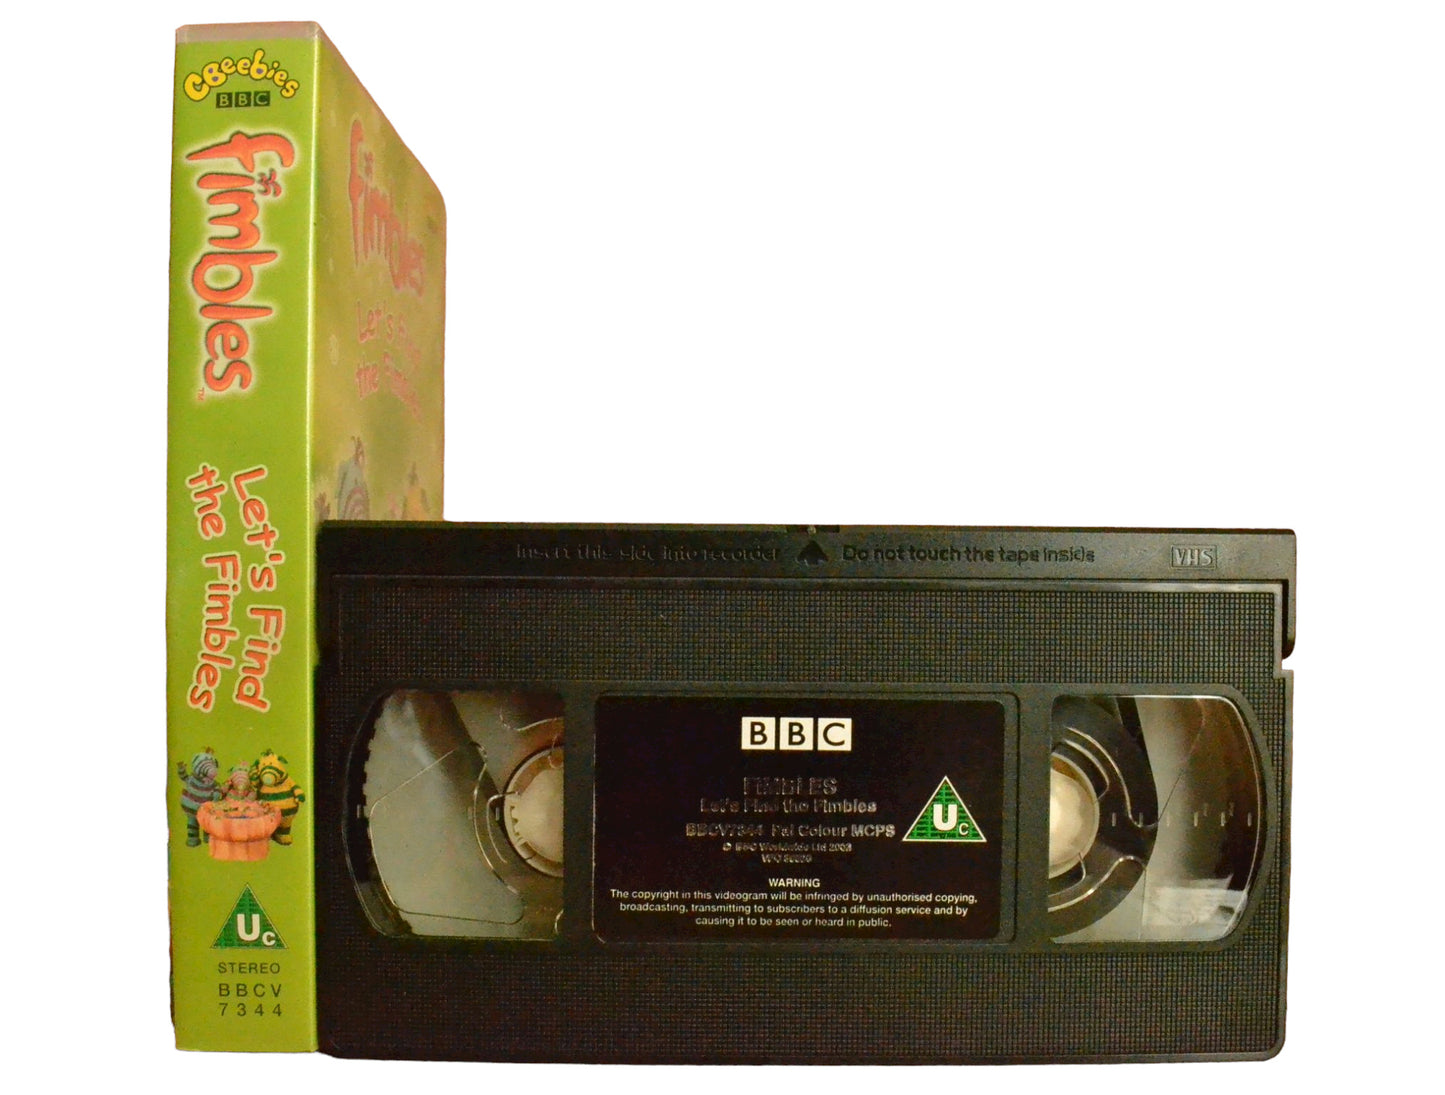 Fimbles - Aidan Cook - CBEEBIES BBC - Childrens - PAL - VHS-